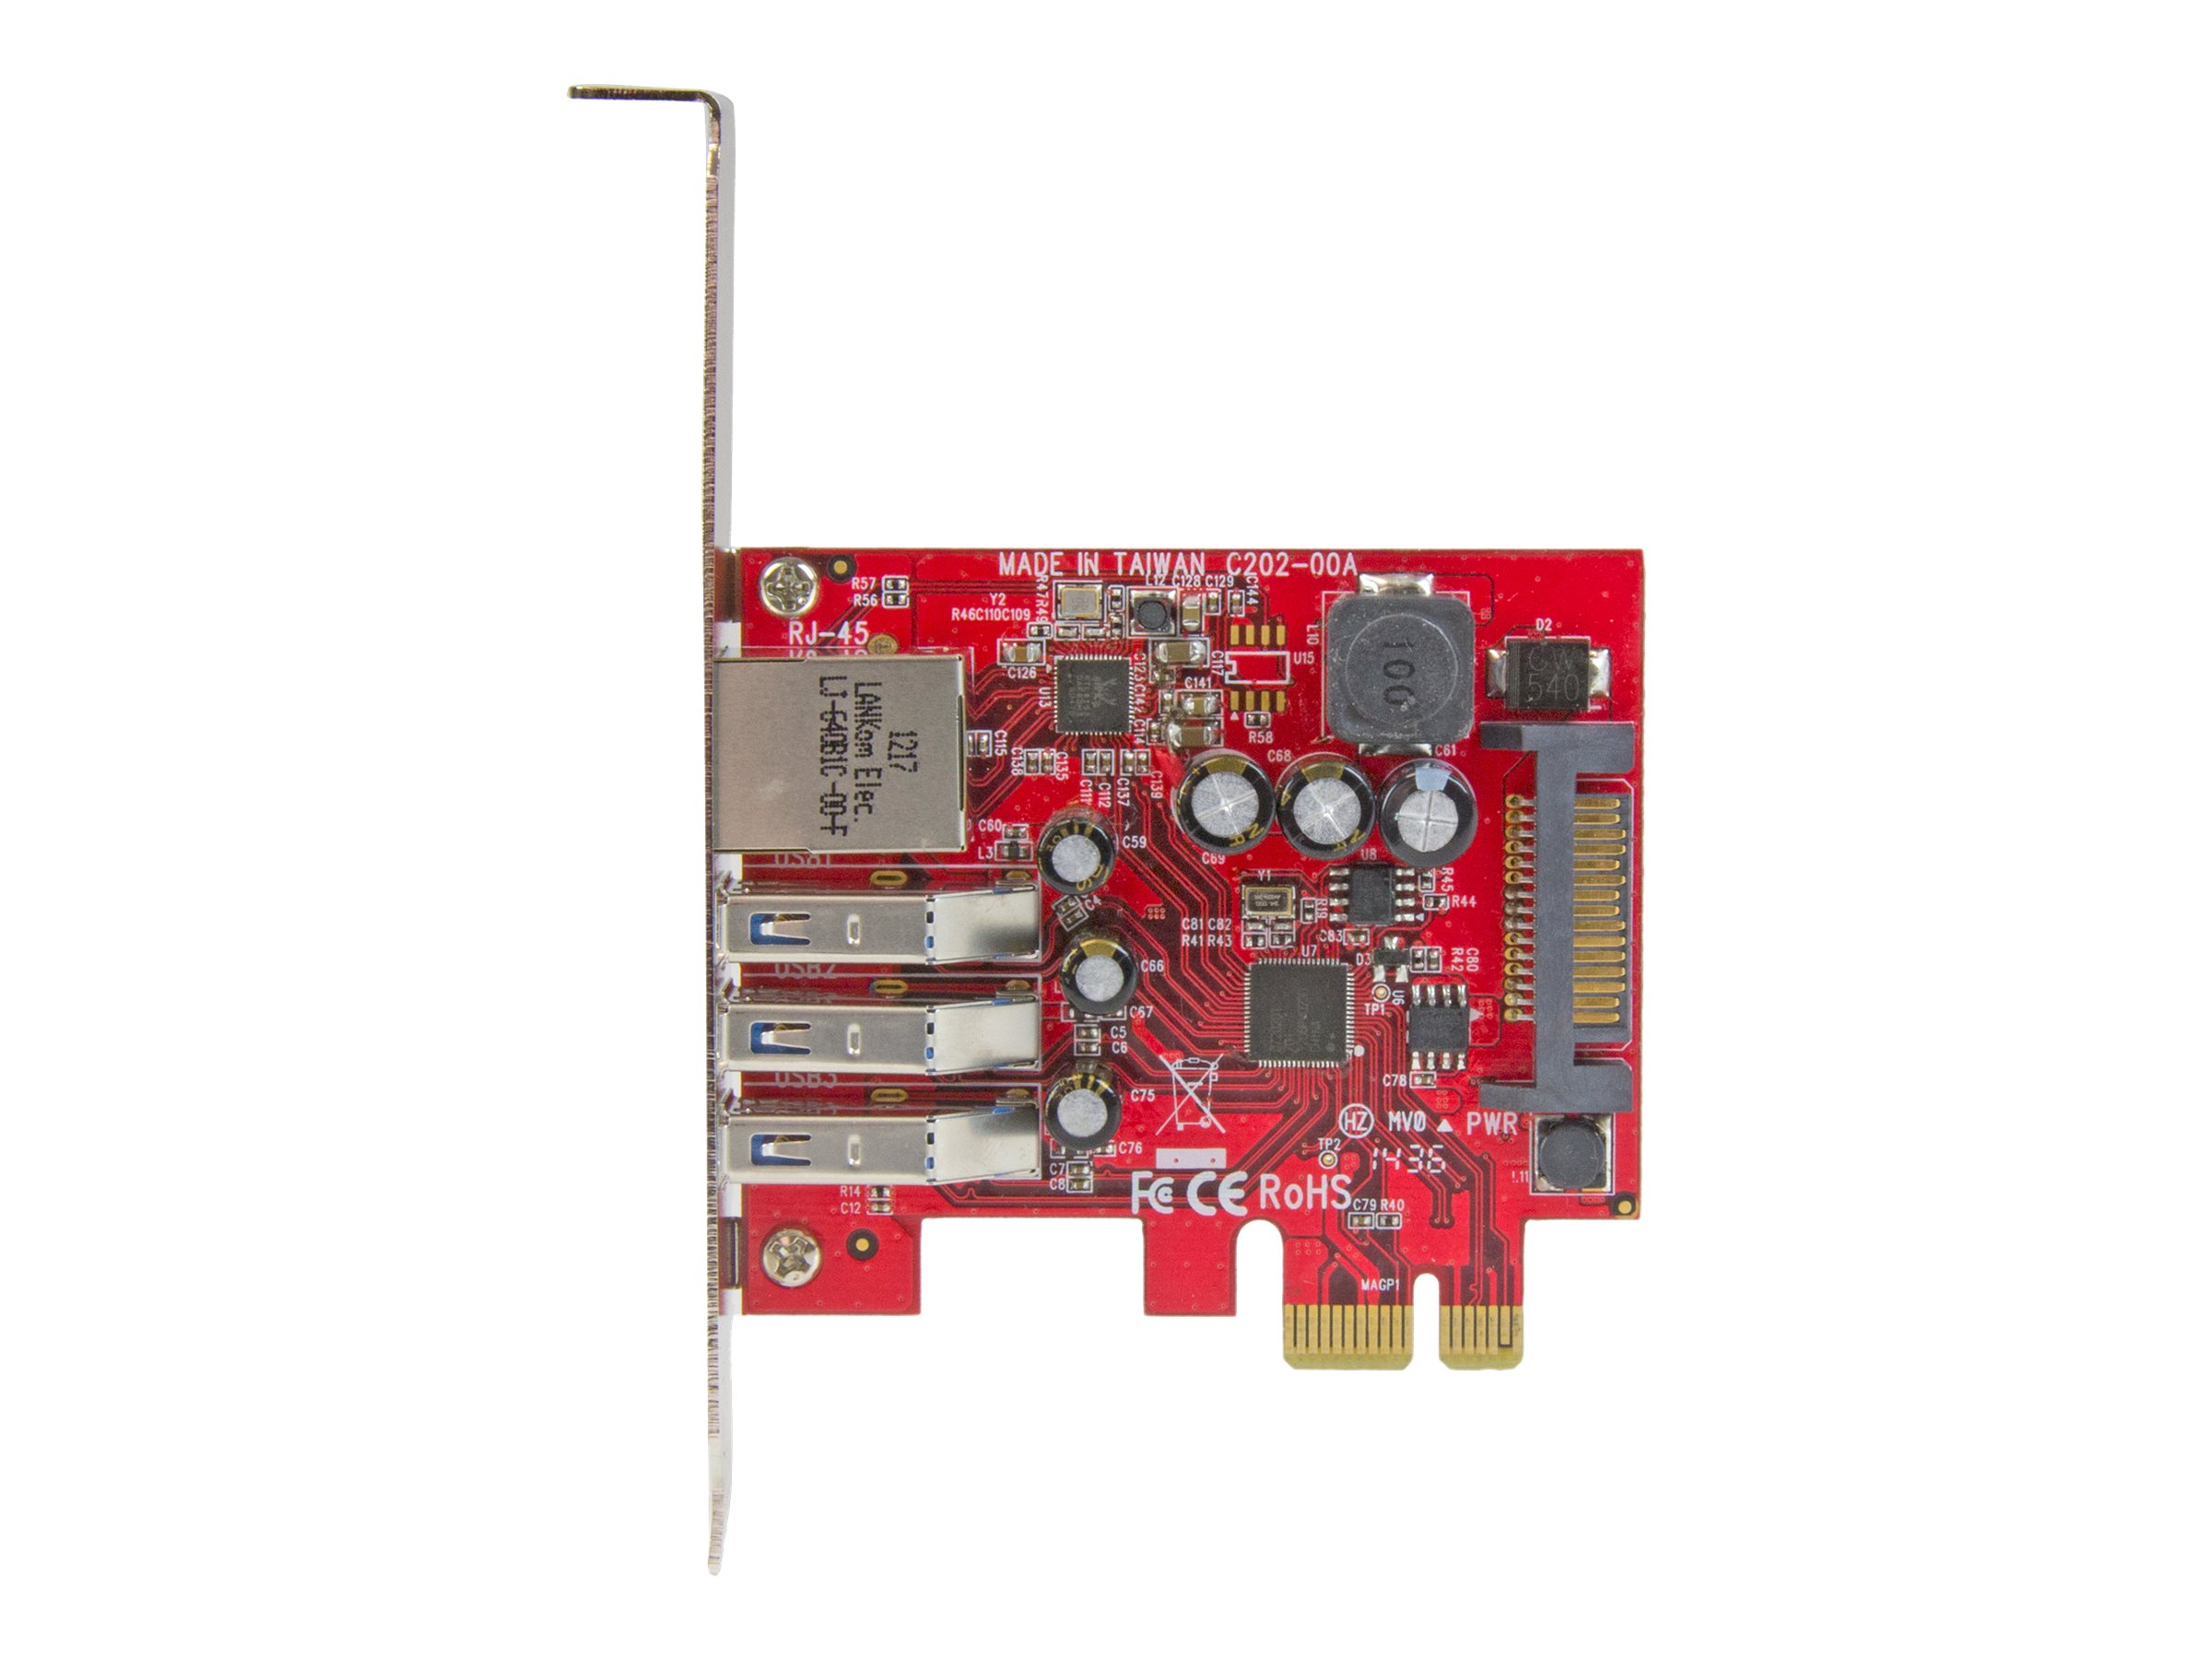 StarTech.com 3 Port PCI Express USB 3.0 Karte mit Gigabit Ethernet